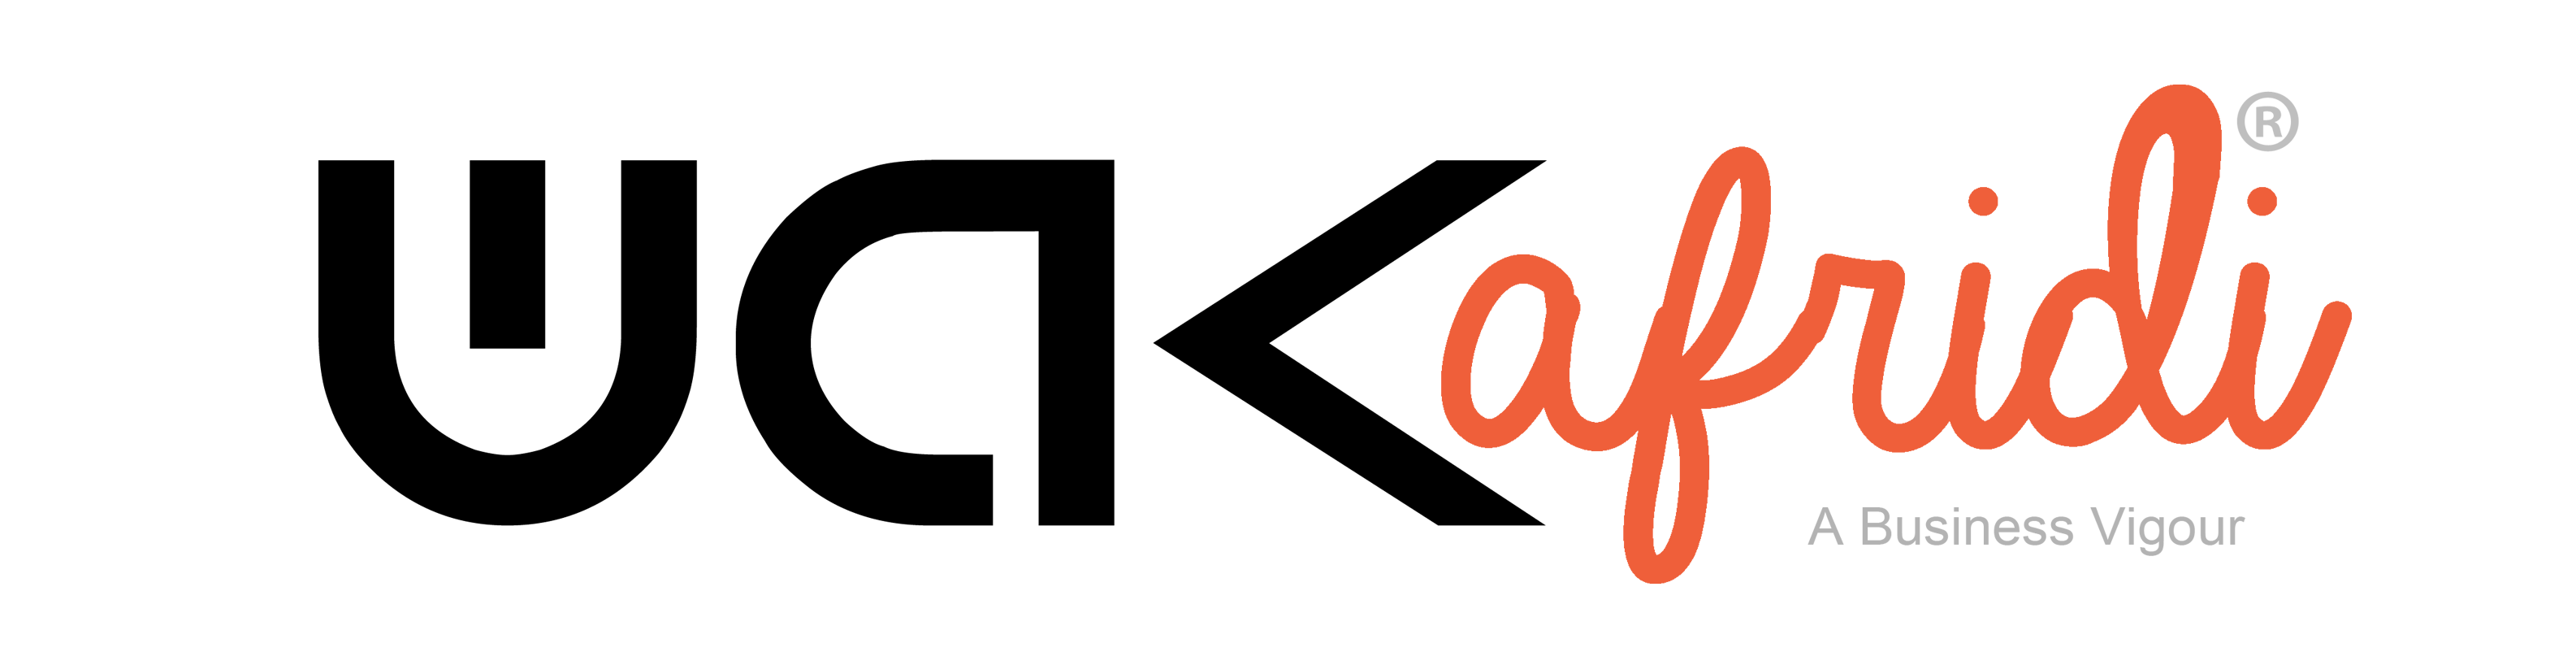 wak afridi logo